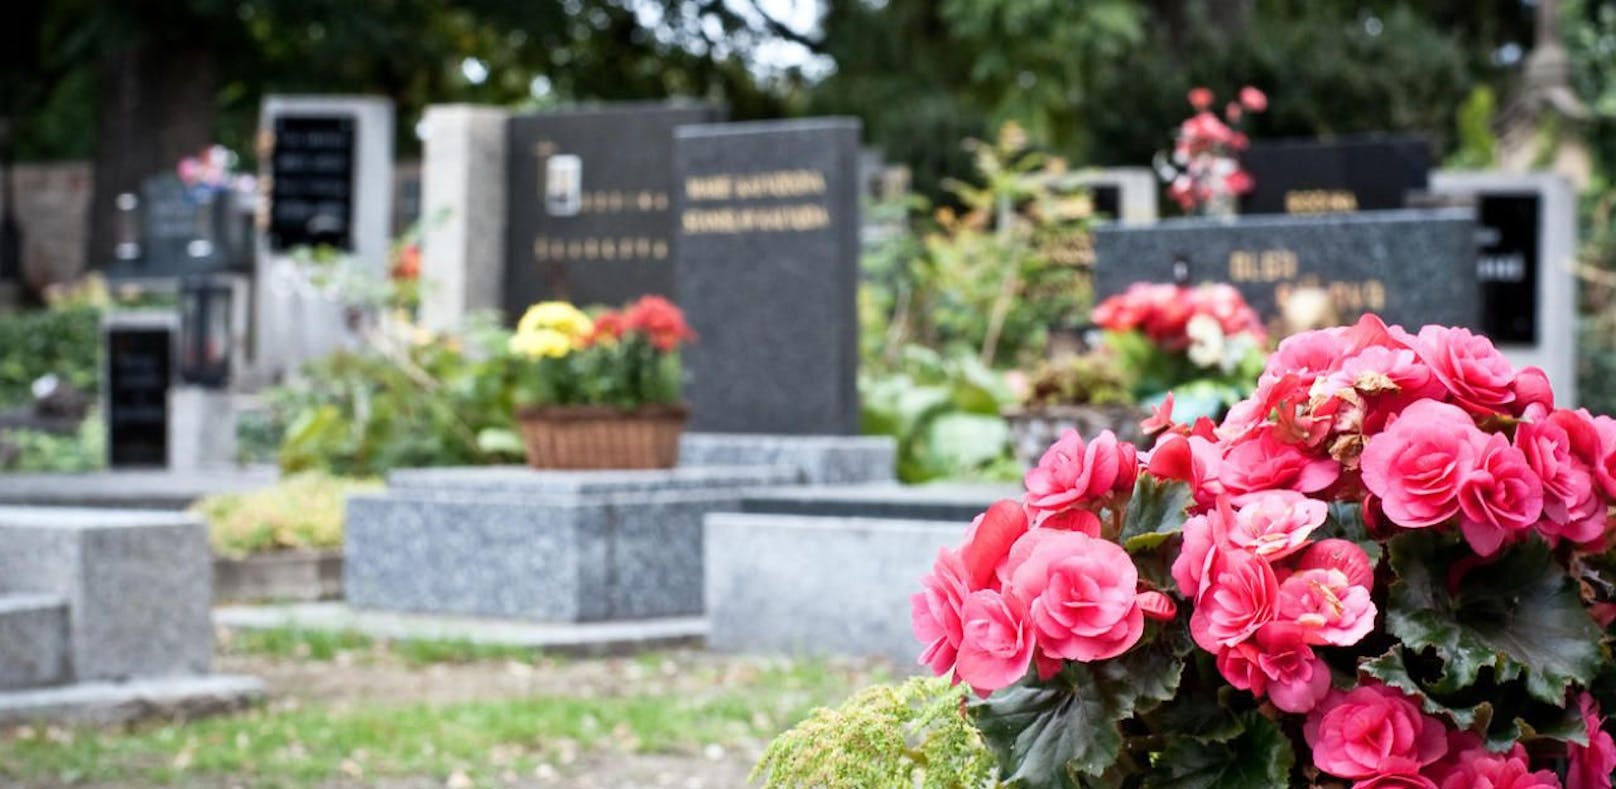 Drama am Friedhof: Frau starb bei Grabpflege